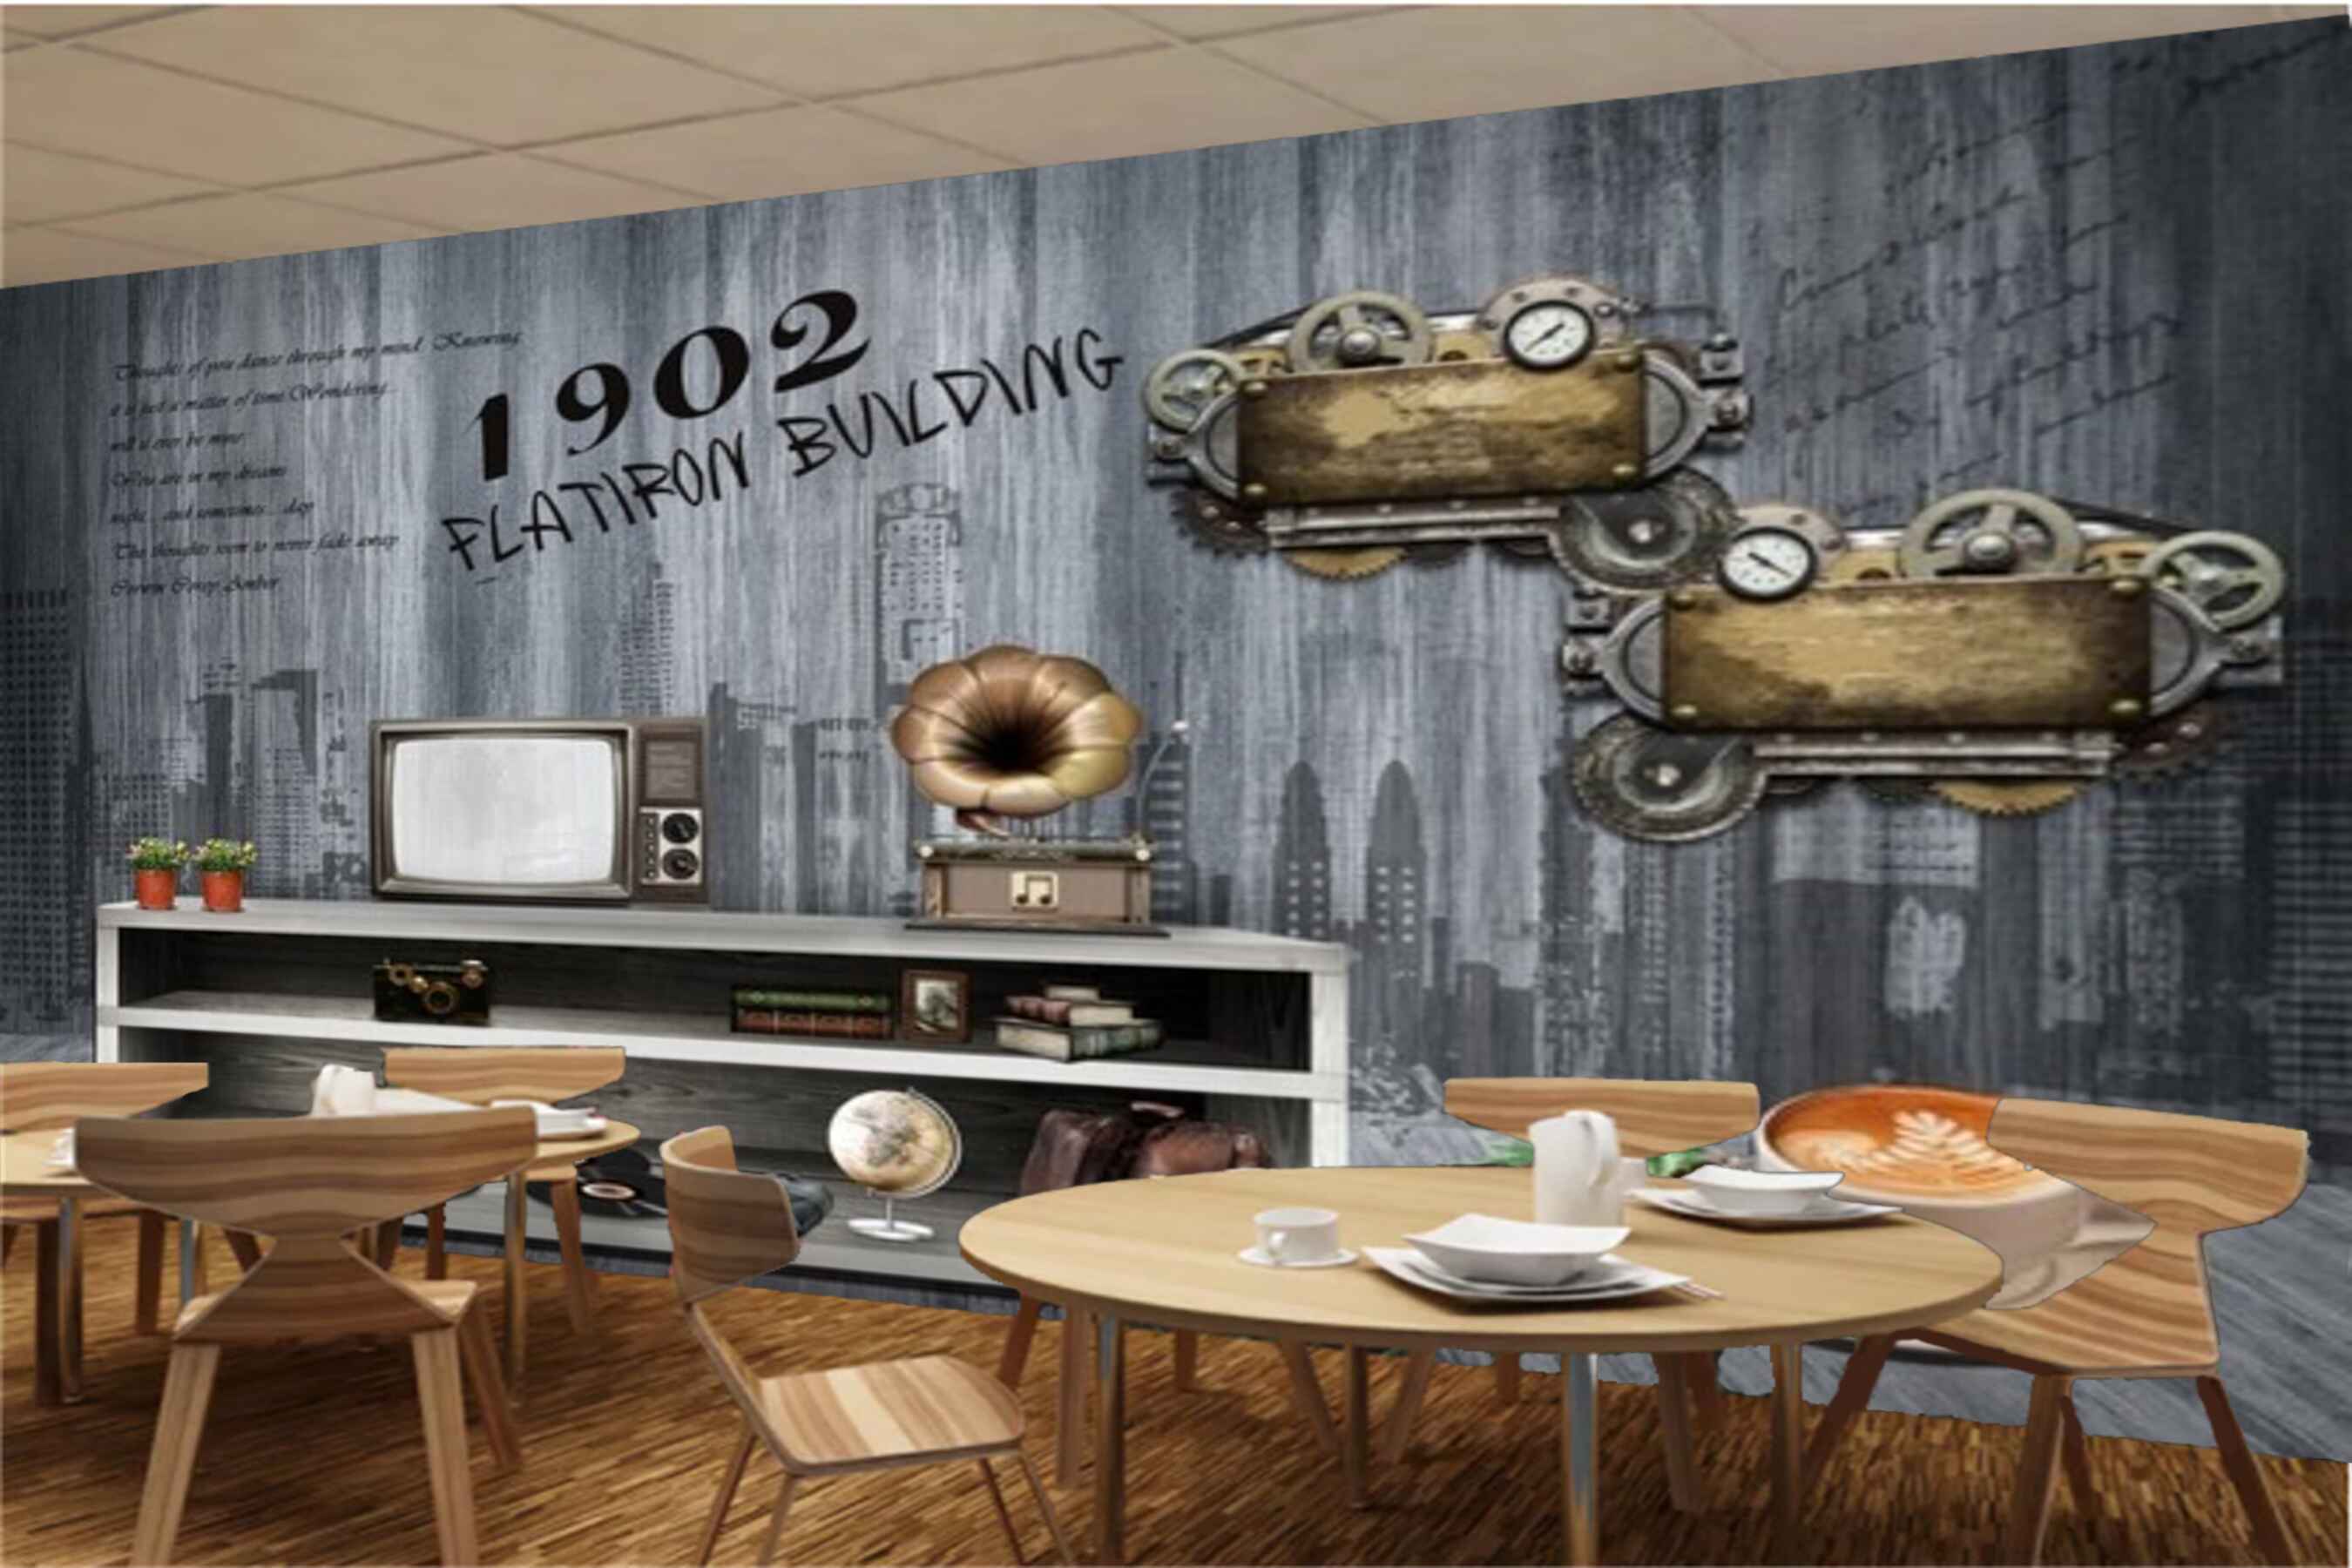 Avikalp MWZ3087 Flatiron Building Coffee Cup HD Wallpaper for Cafe Restaurant